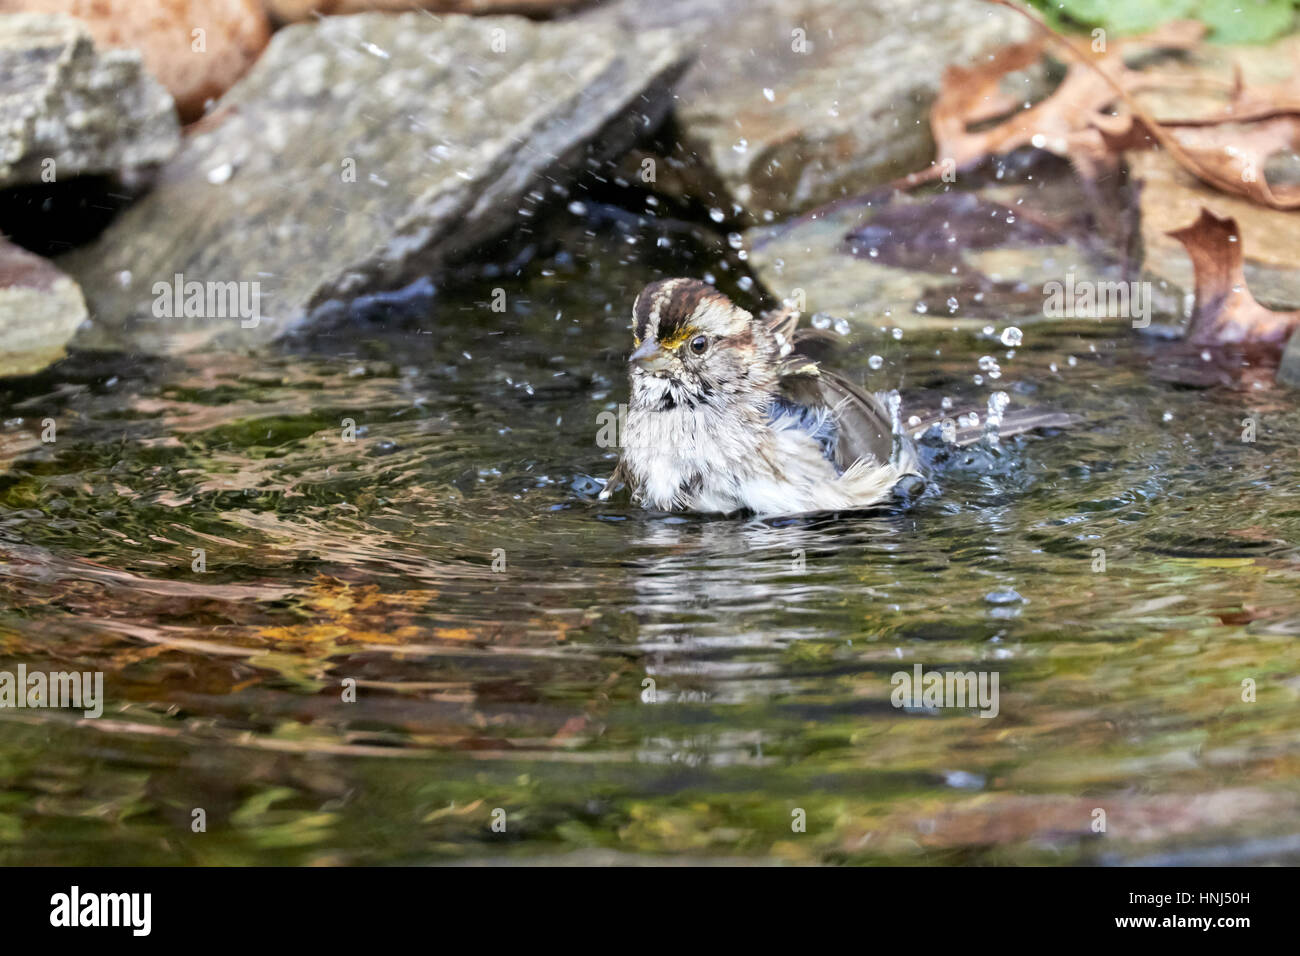 Blanco throated Sparrow Foto de stock